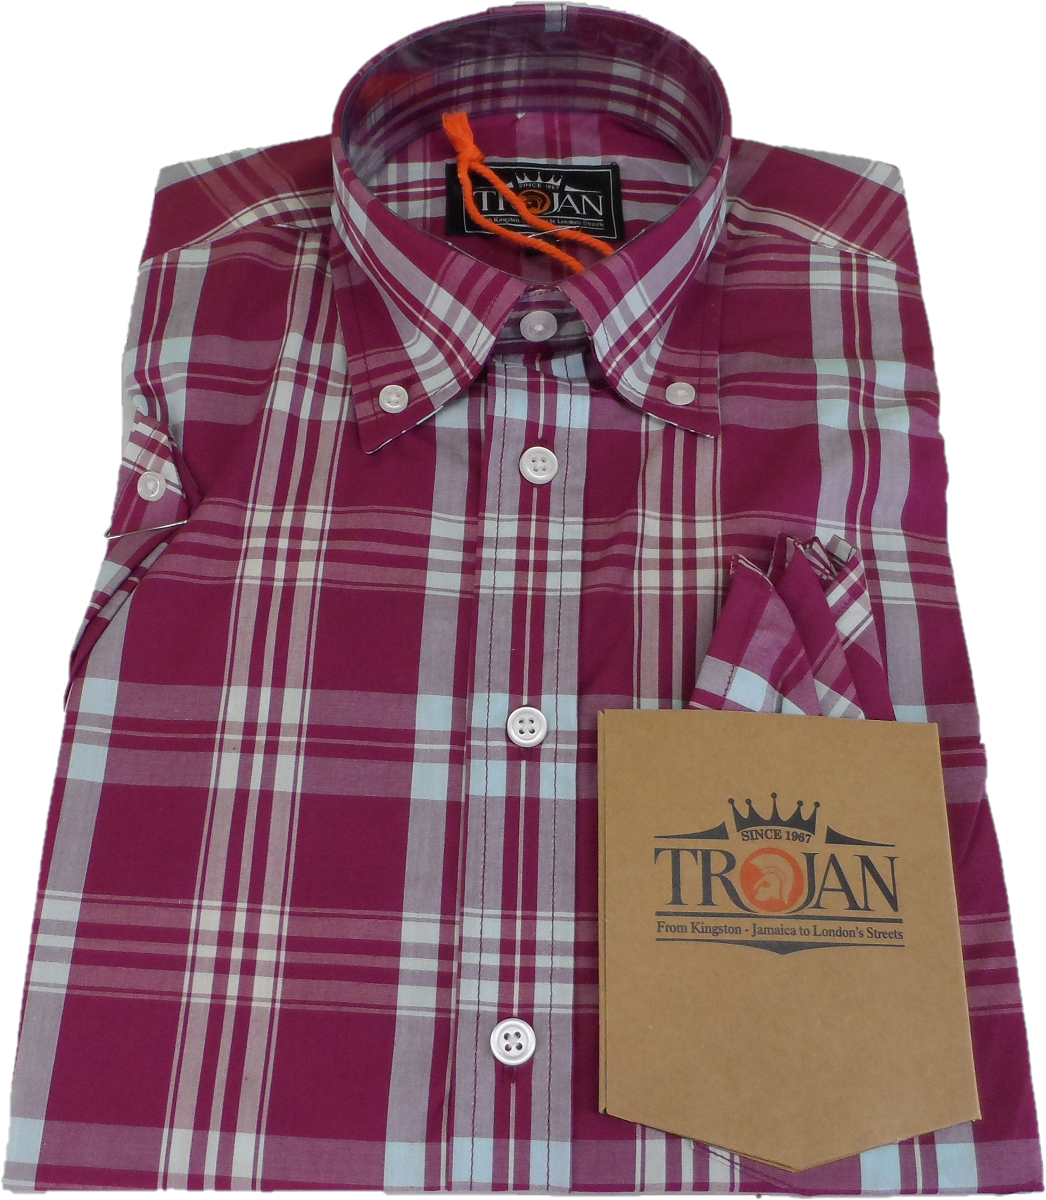 Trojan Mens Port Check 100% Cotton Short Sleeved Shirts and Pocket Square